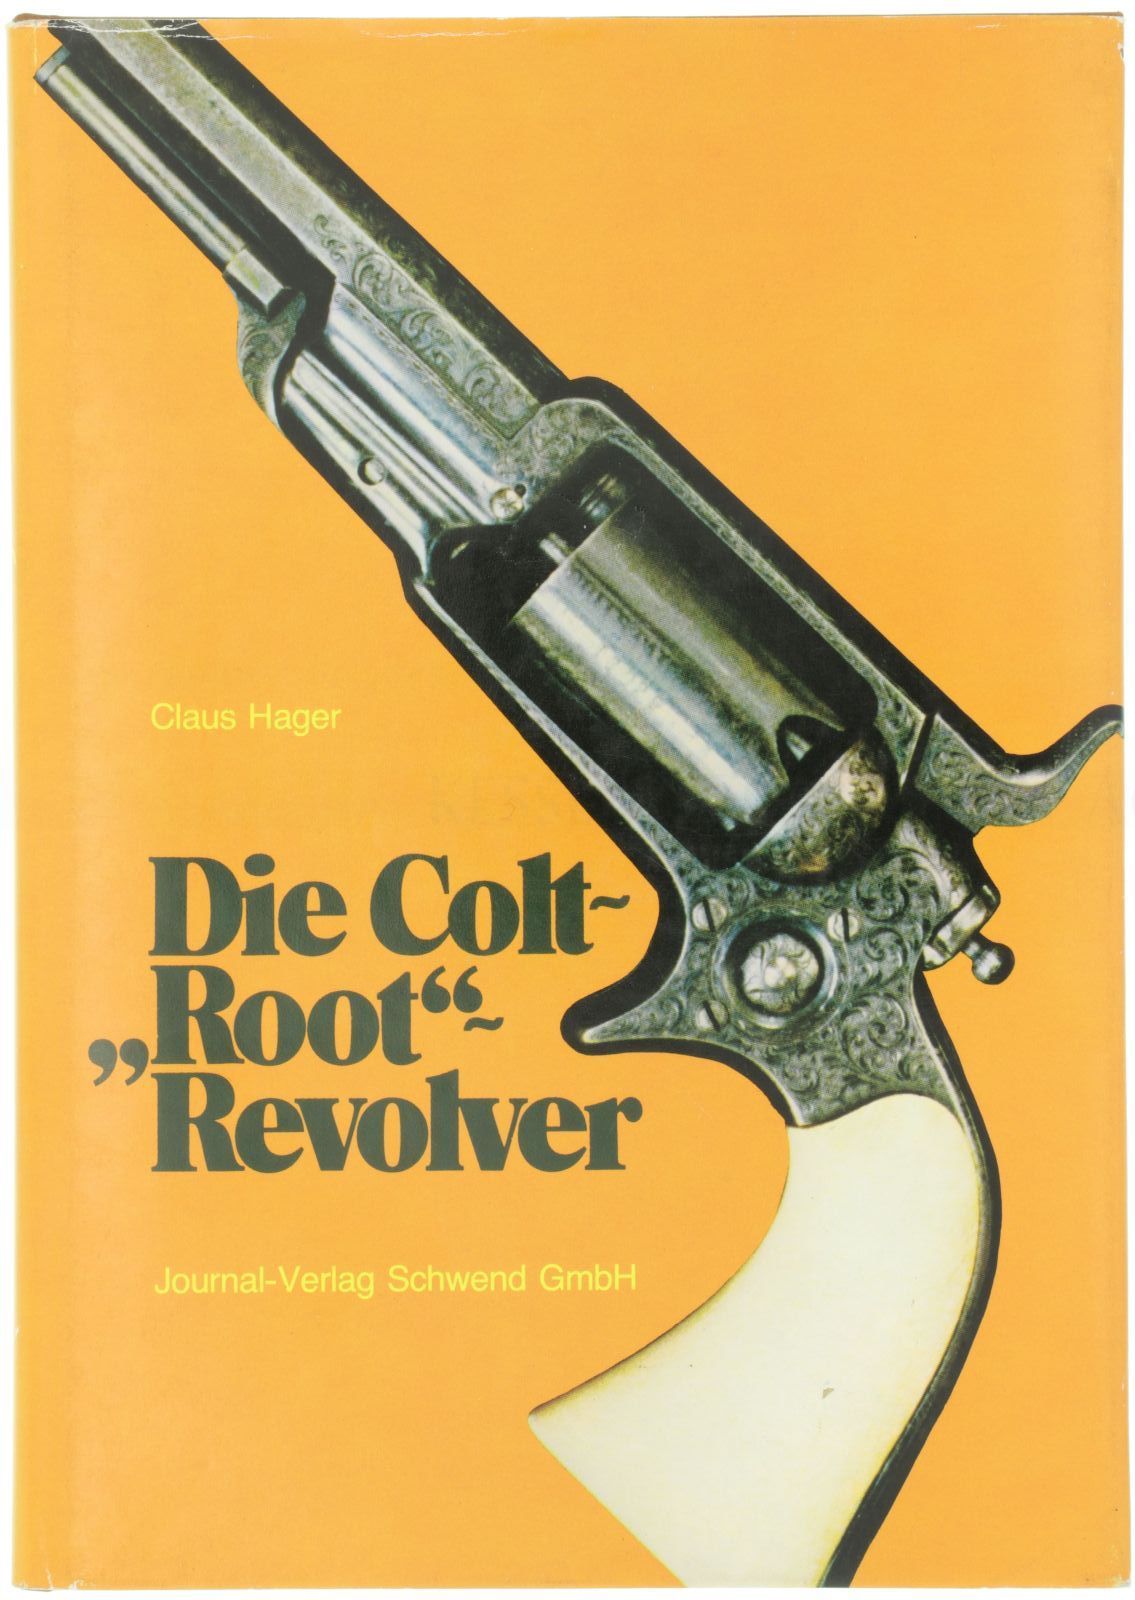 Die Colt "Root"-Revolver, Claus Hager, 1977